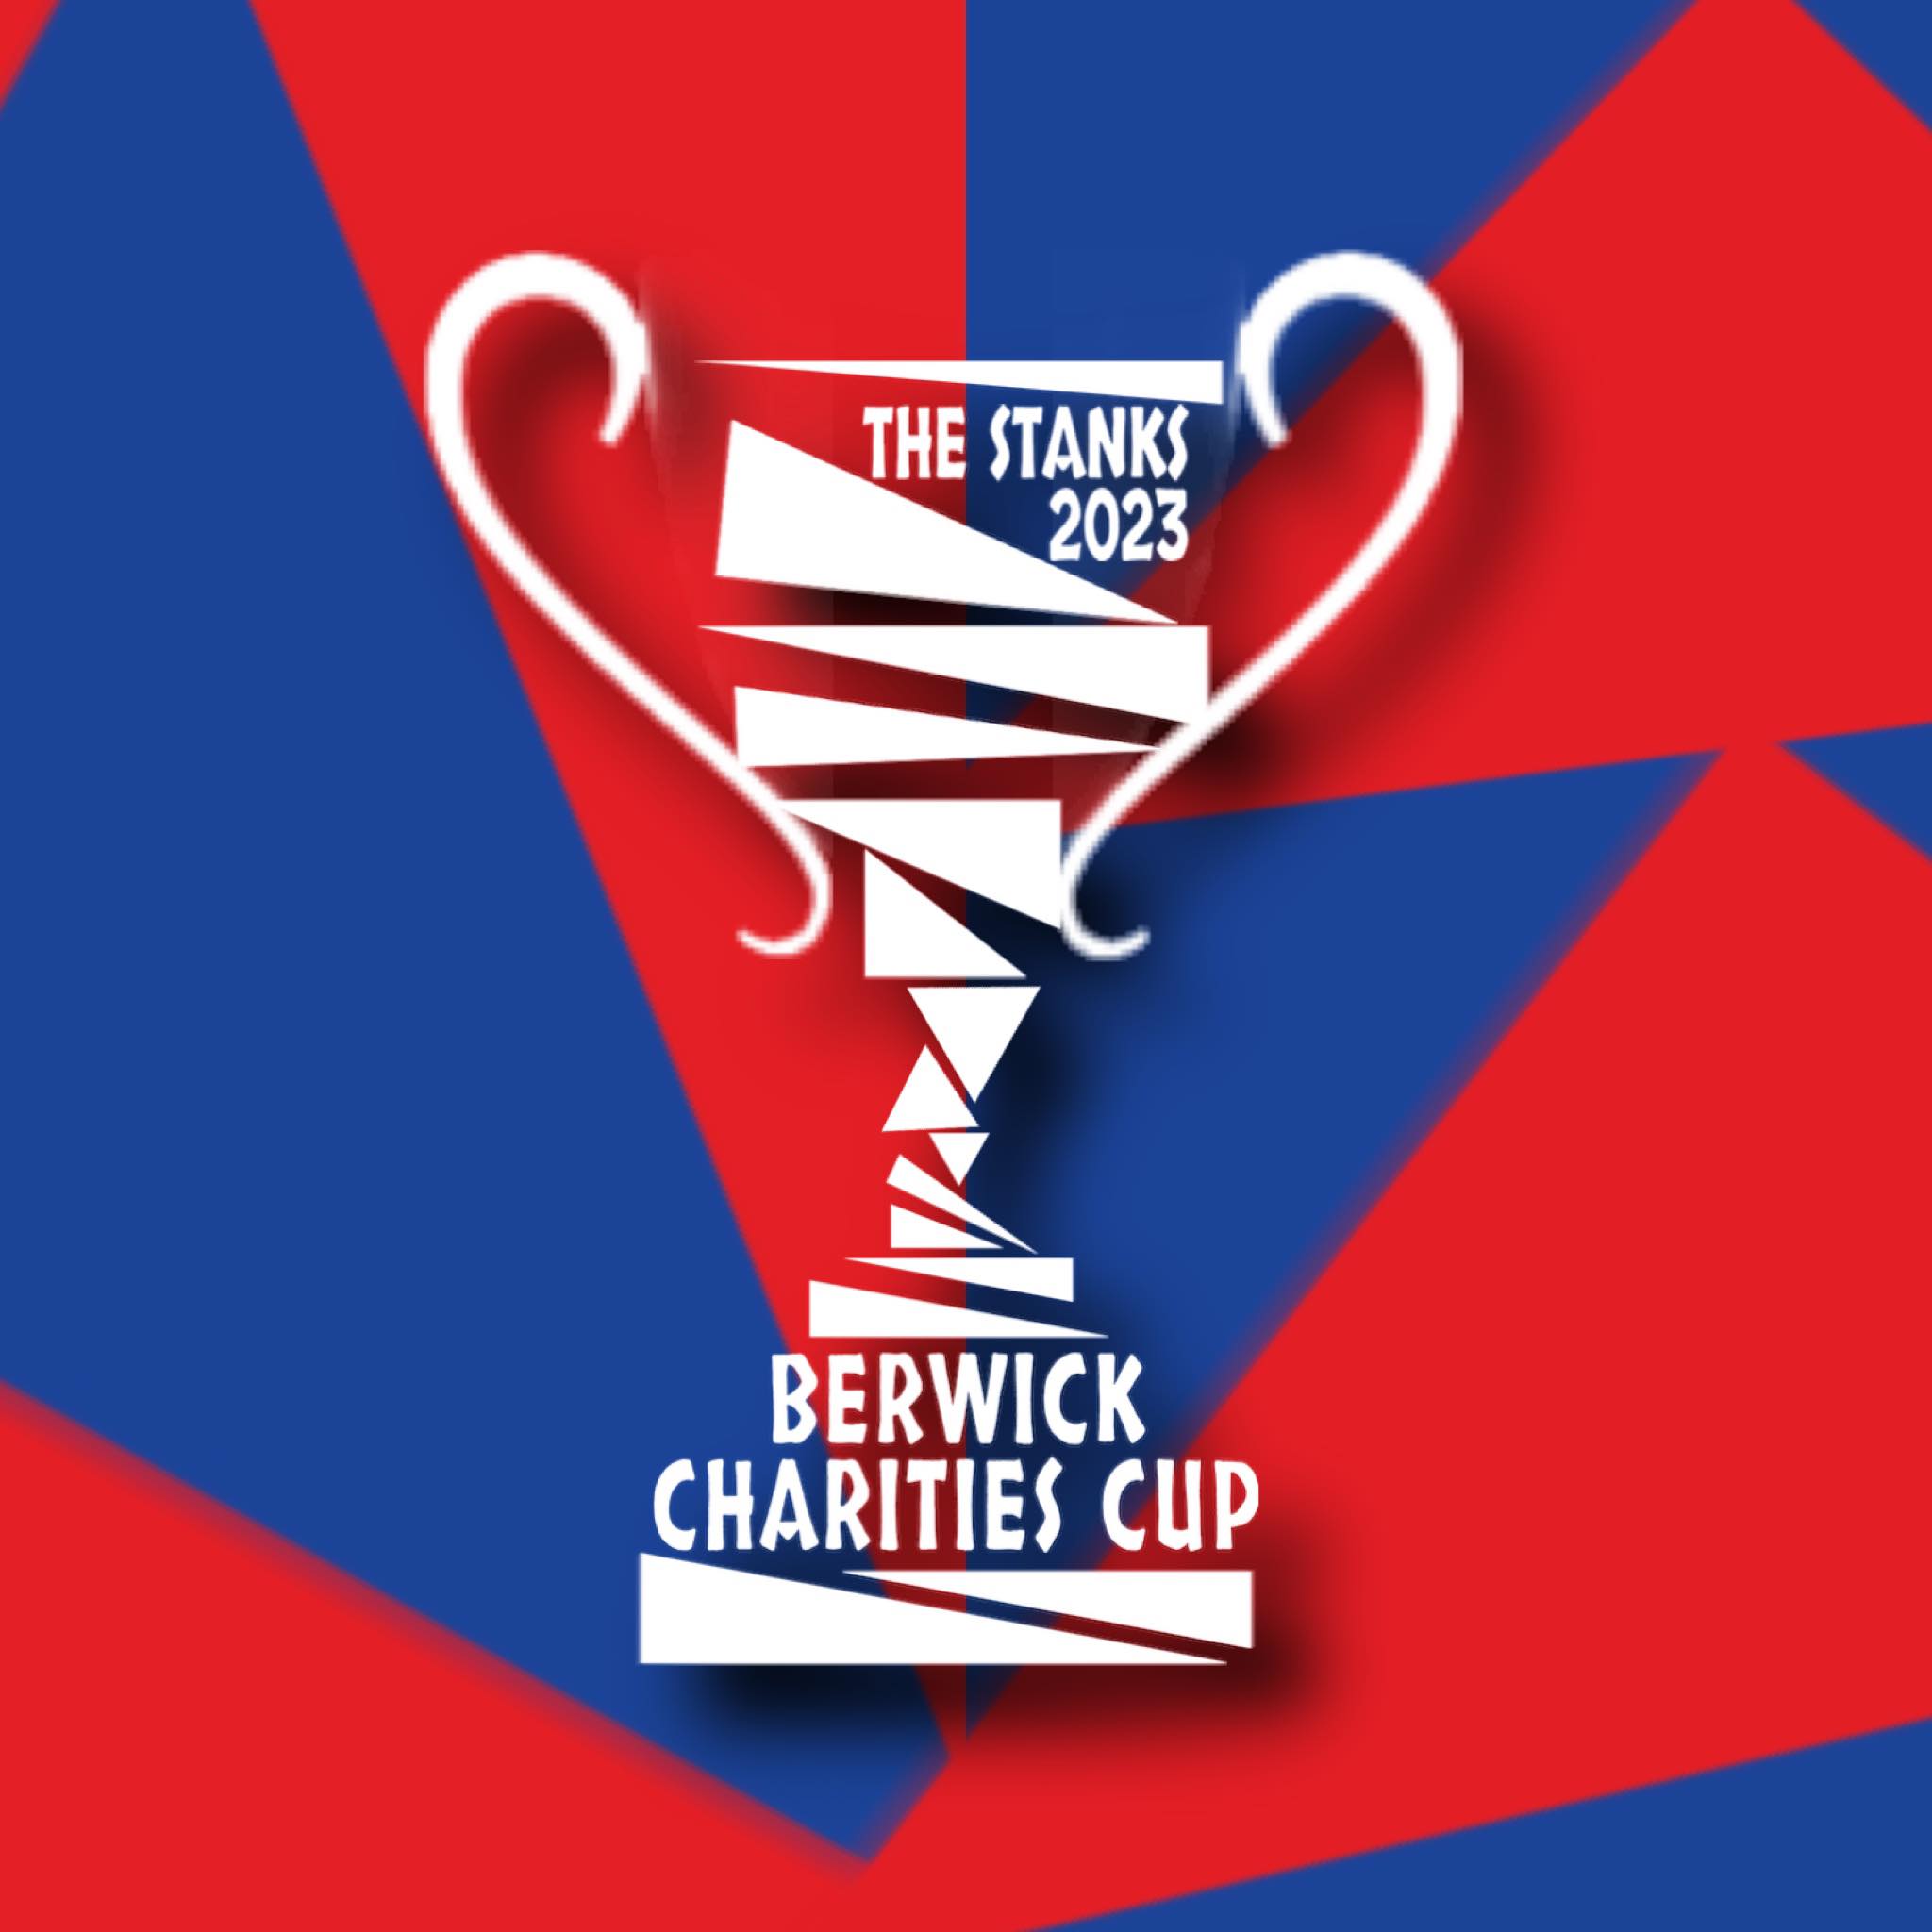 Berwick Charities Cup 2023